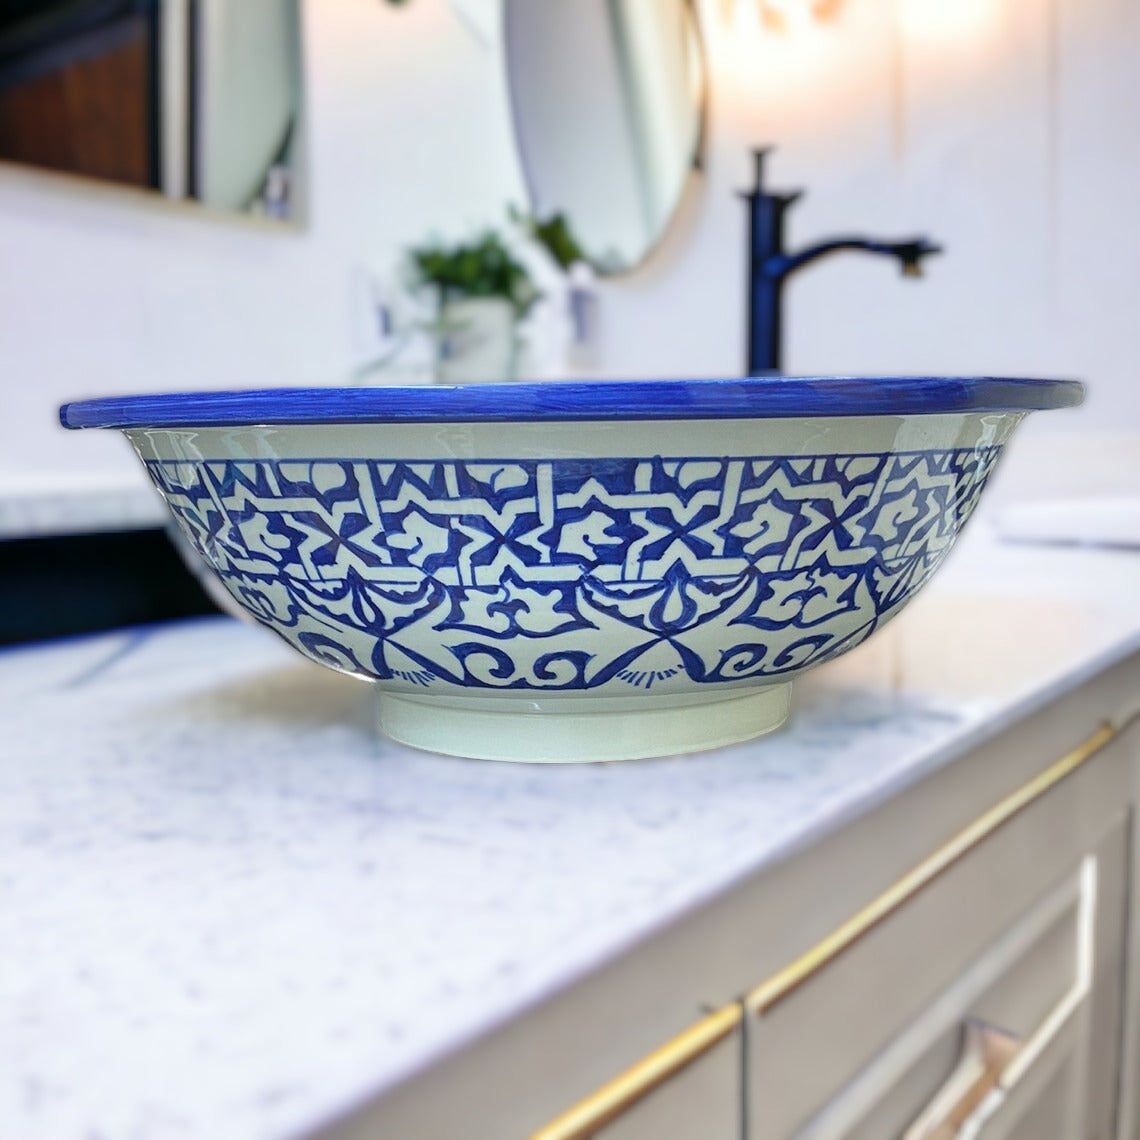 Évier- Vasque Marocaine en céramique pour salle de bain - Lavabo Marocain - Bathroom sink - Moroccan sink bowl #19